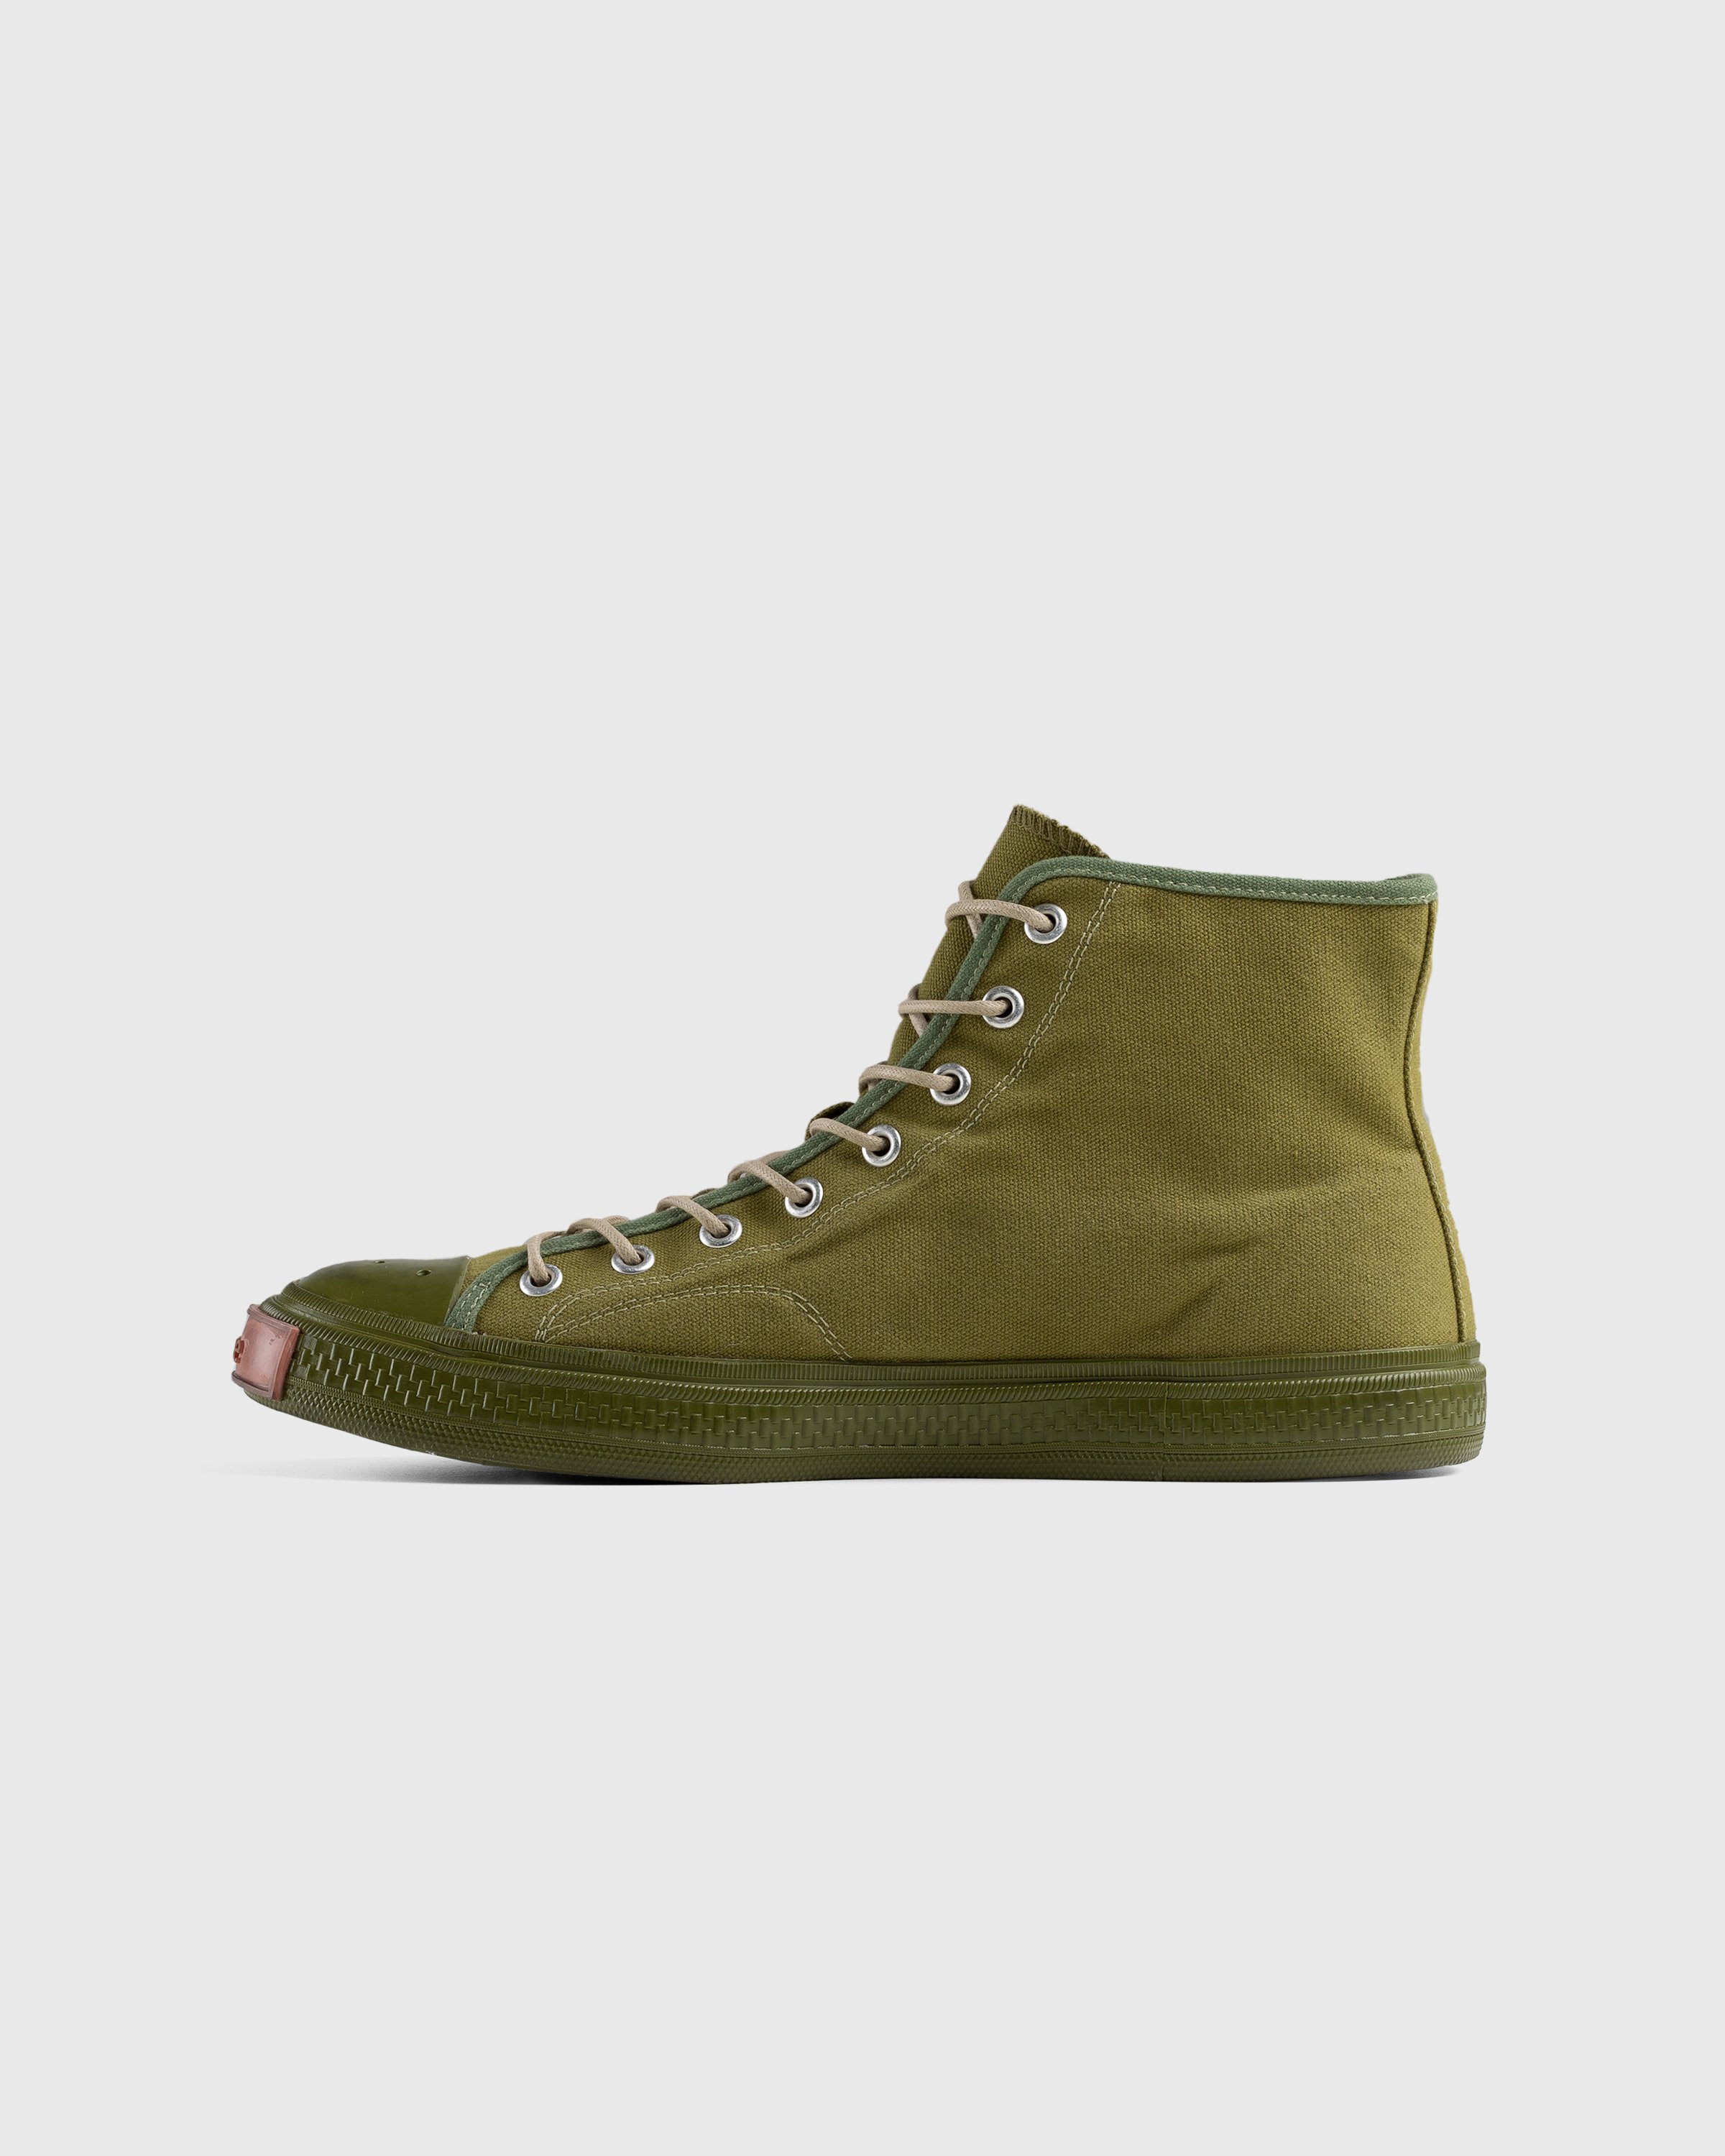 Acne Studios - Ballow High-Top Sneakers Olive Green - Footwear - Green - Image 2